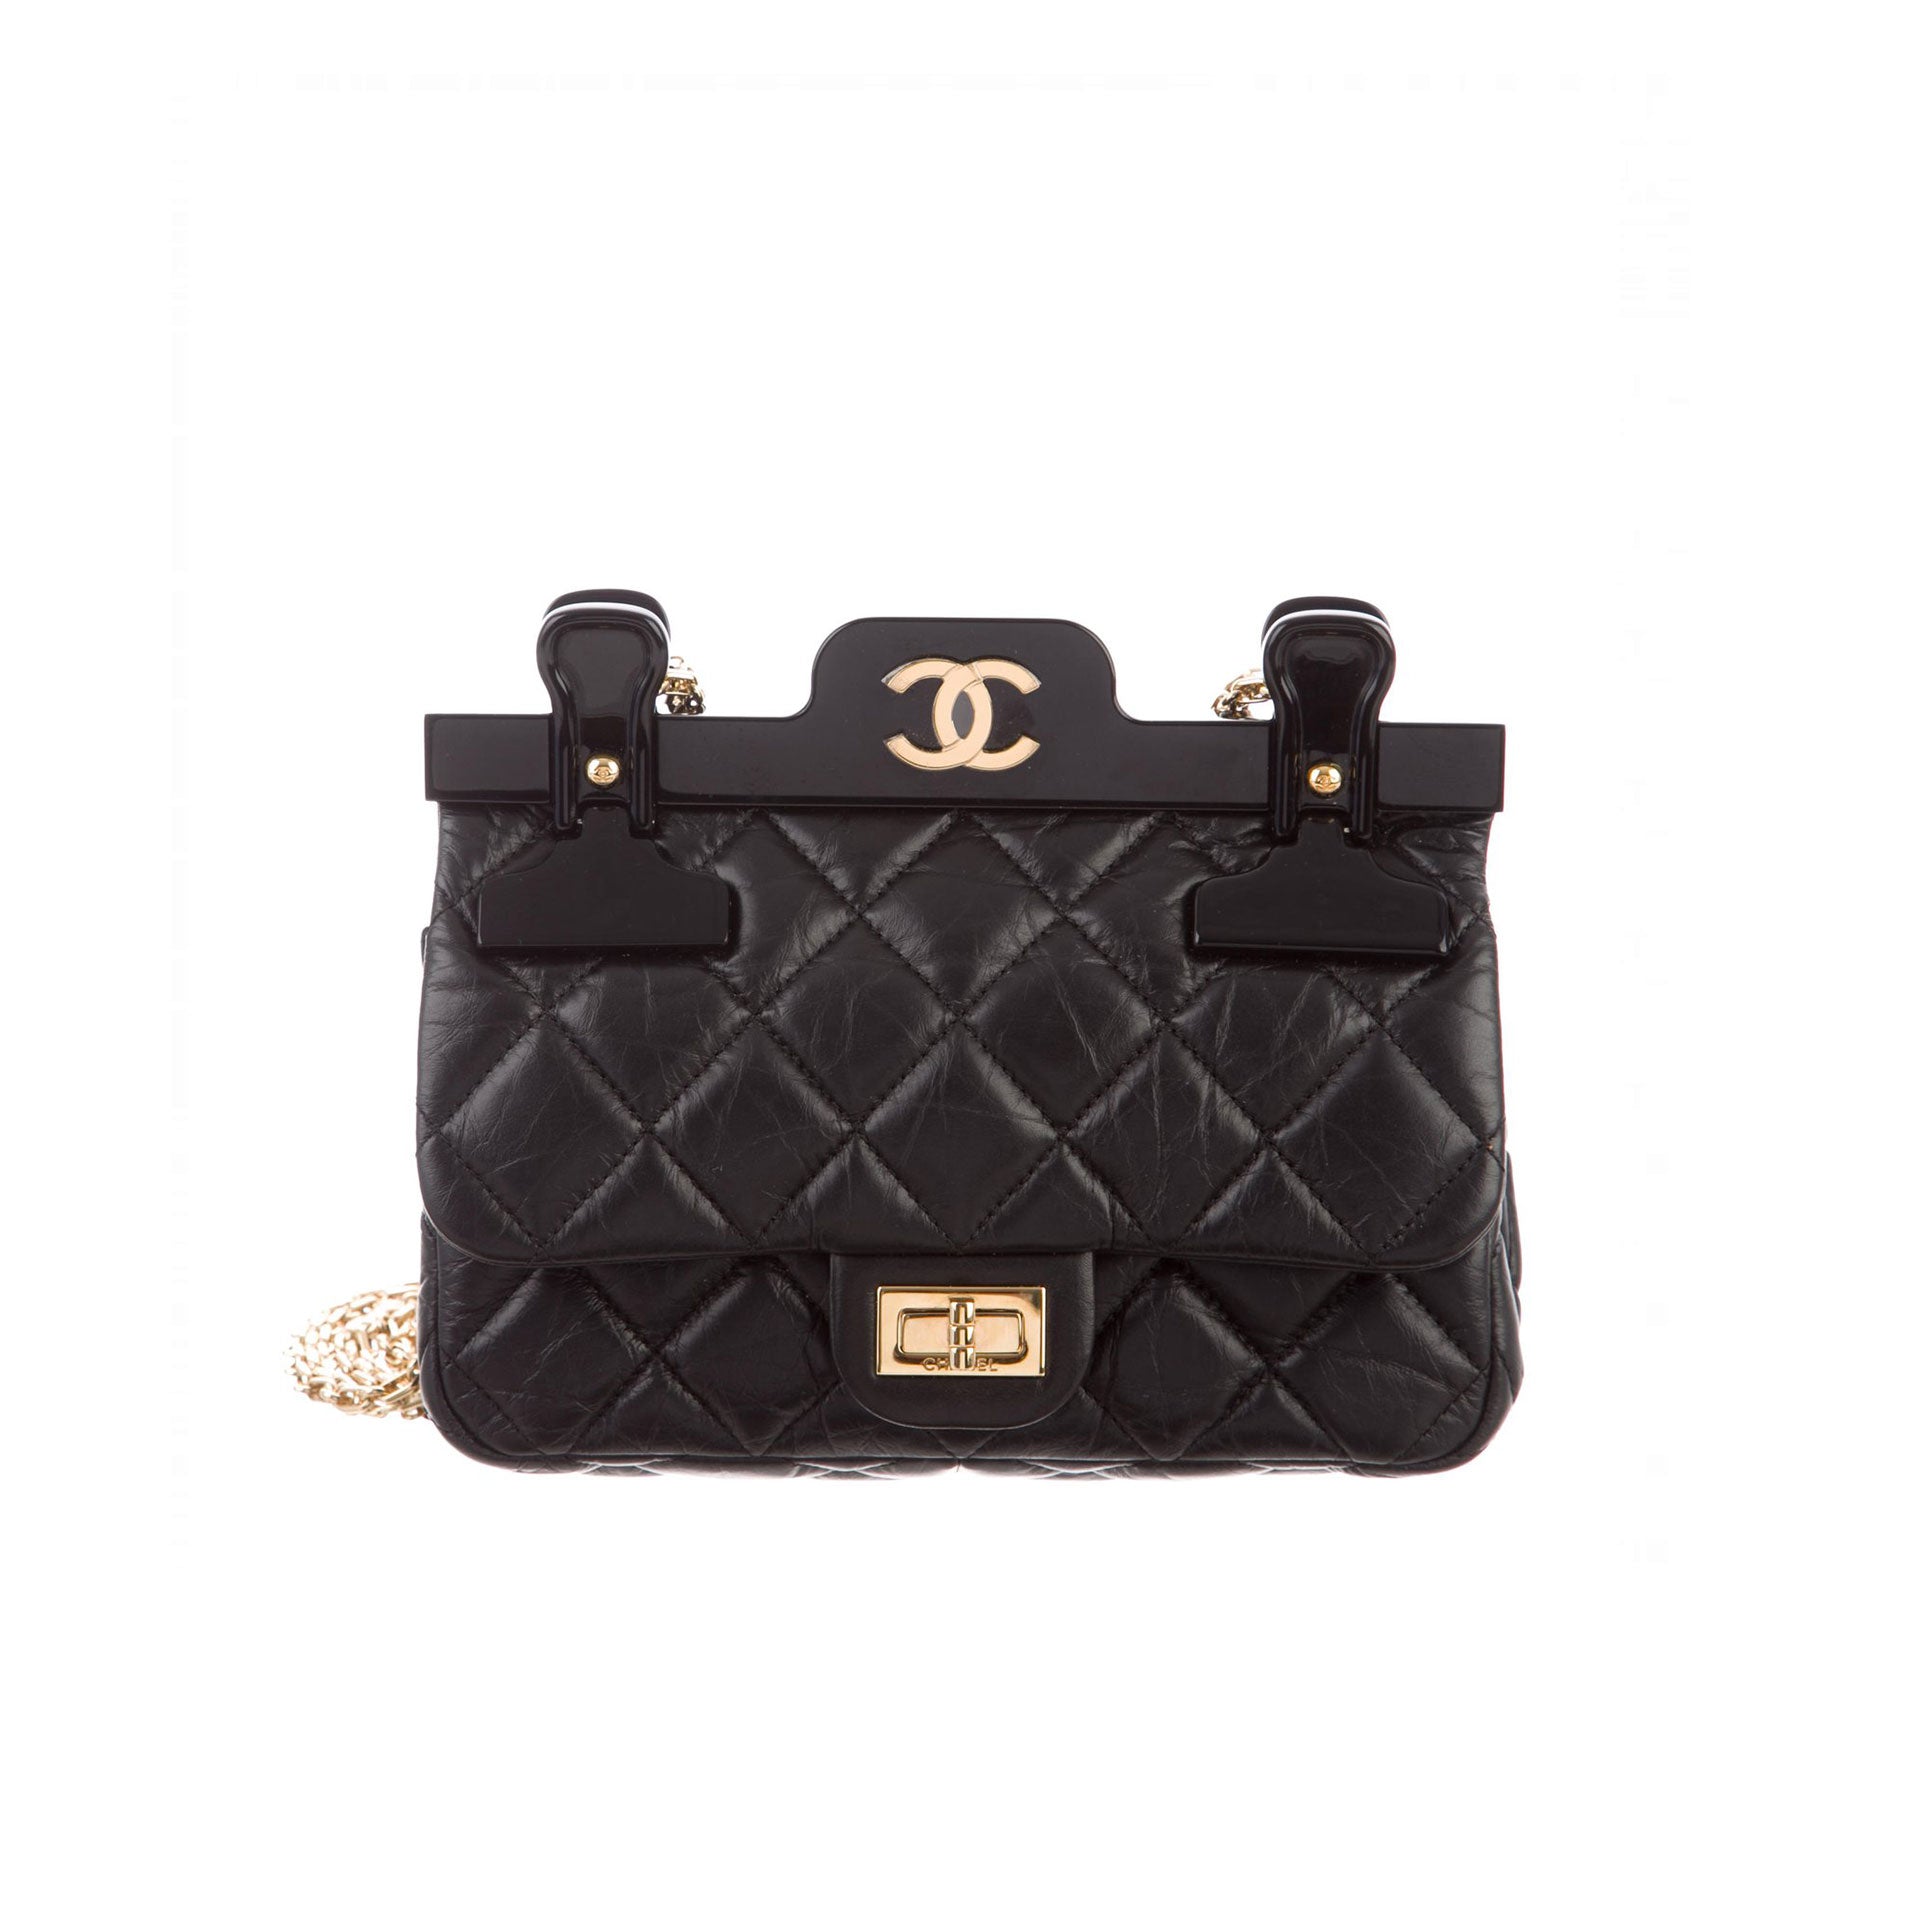 Chanel Mini 2.55 Reissue 225 Handbag